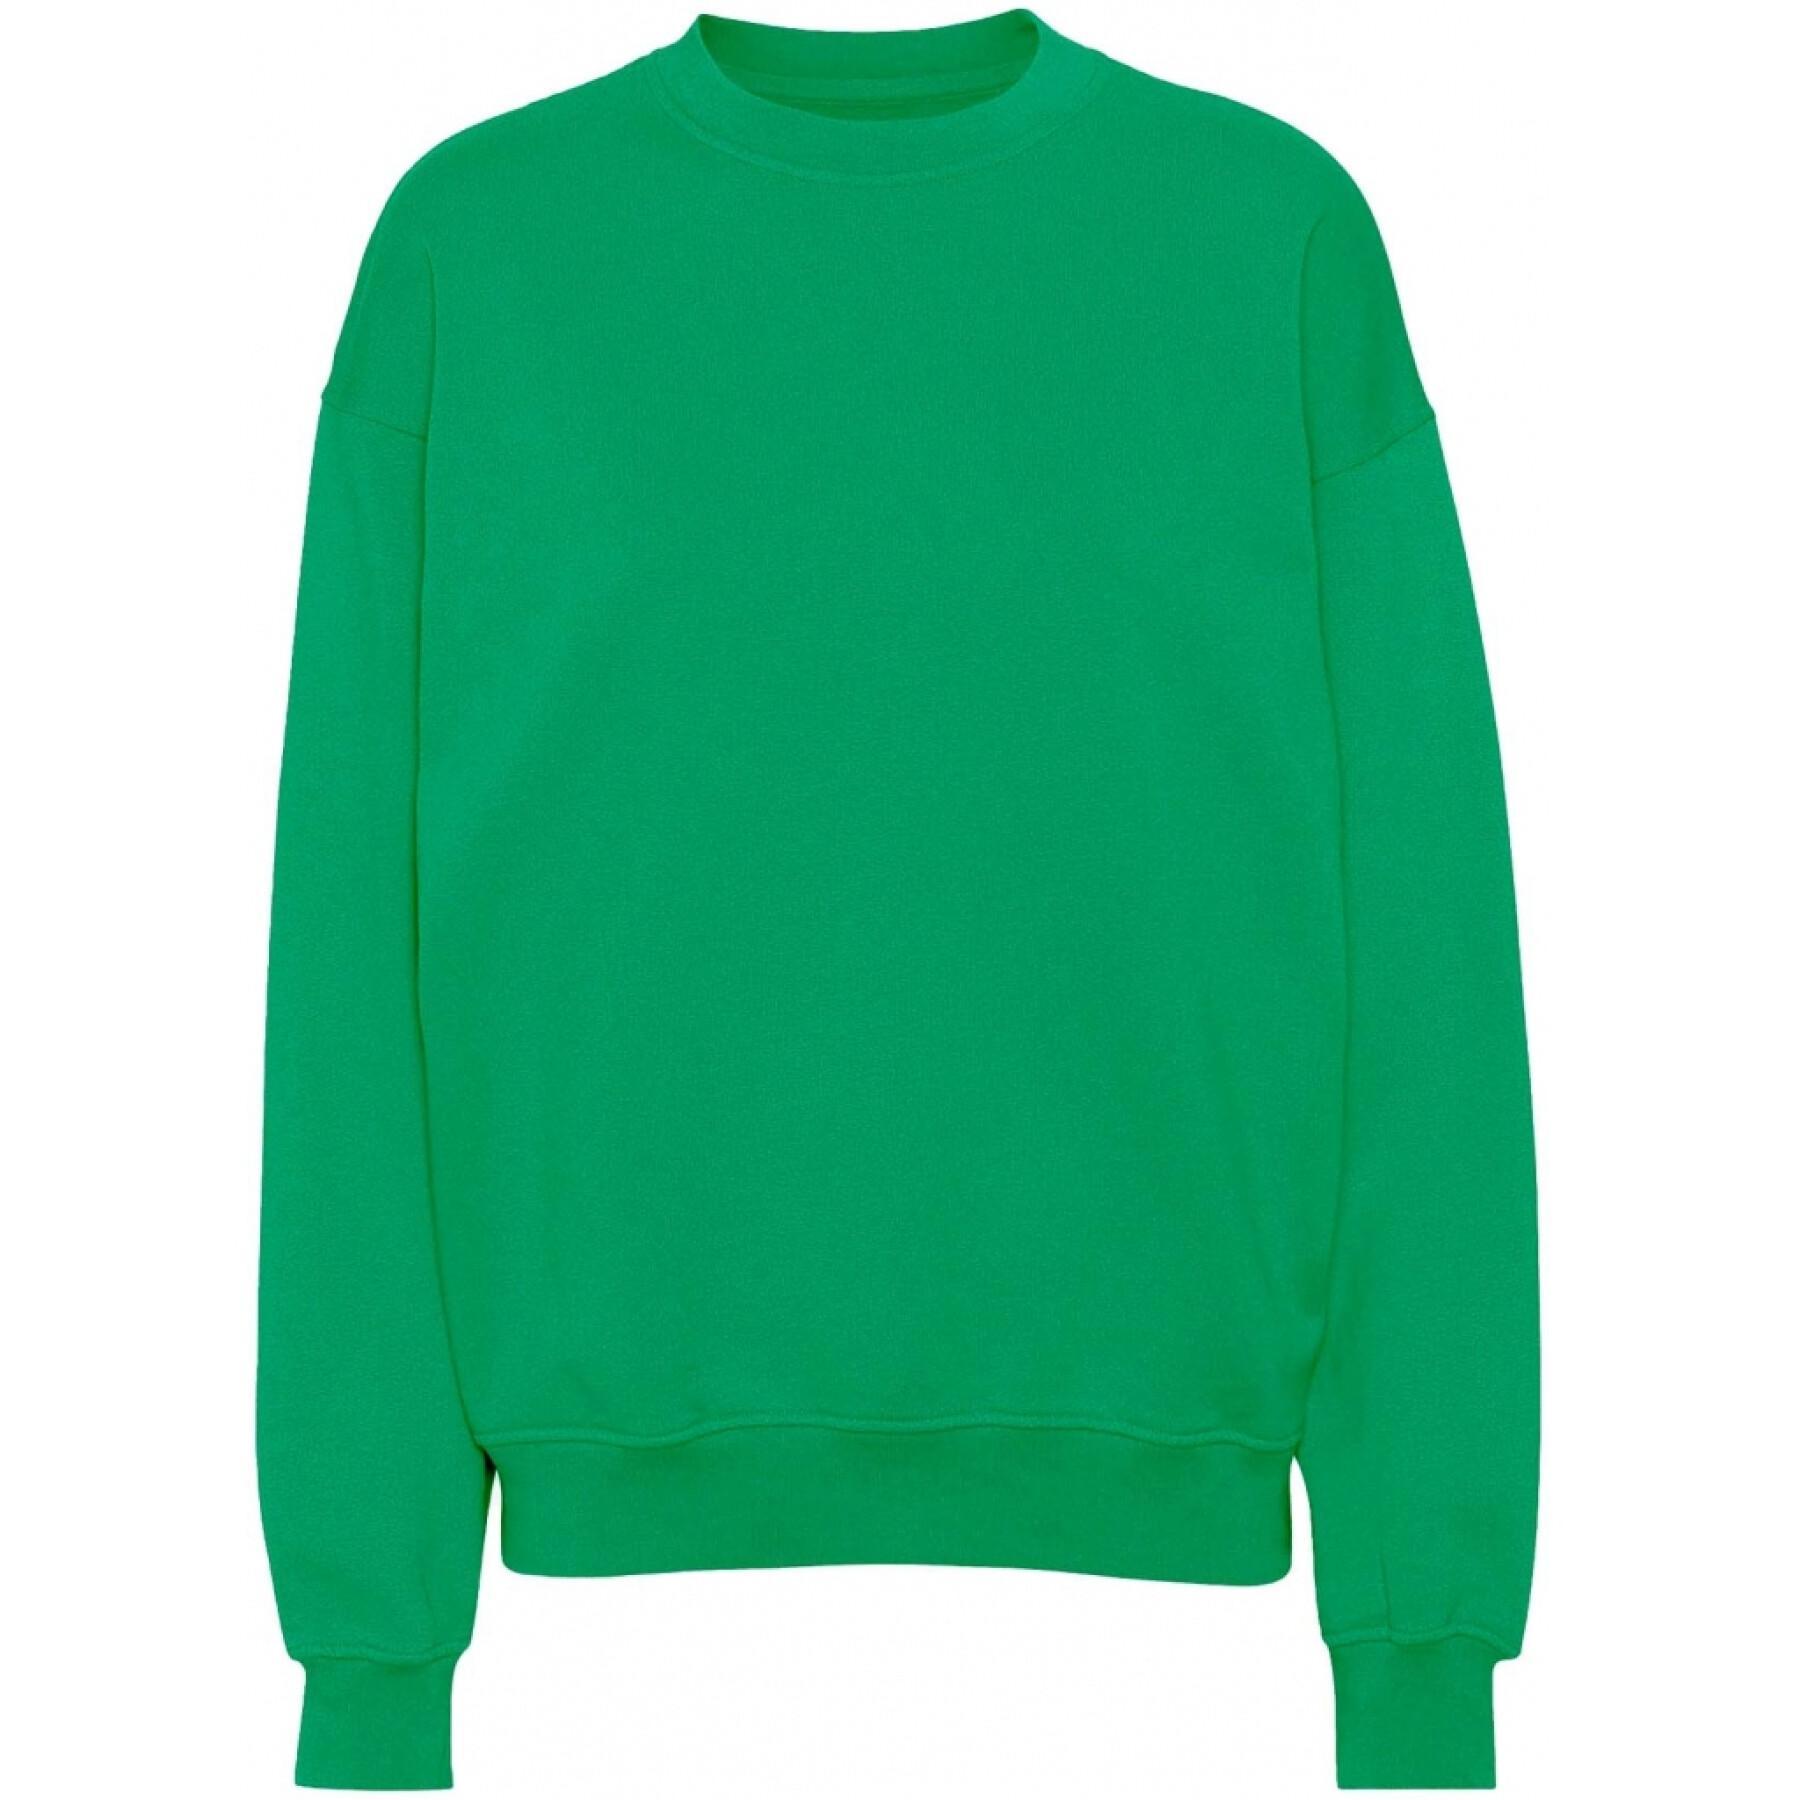 Sweatshirt ronde hals Colorful Standard Organic oversized kelly green